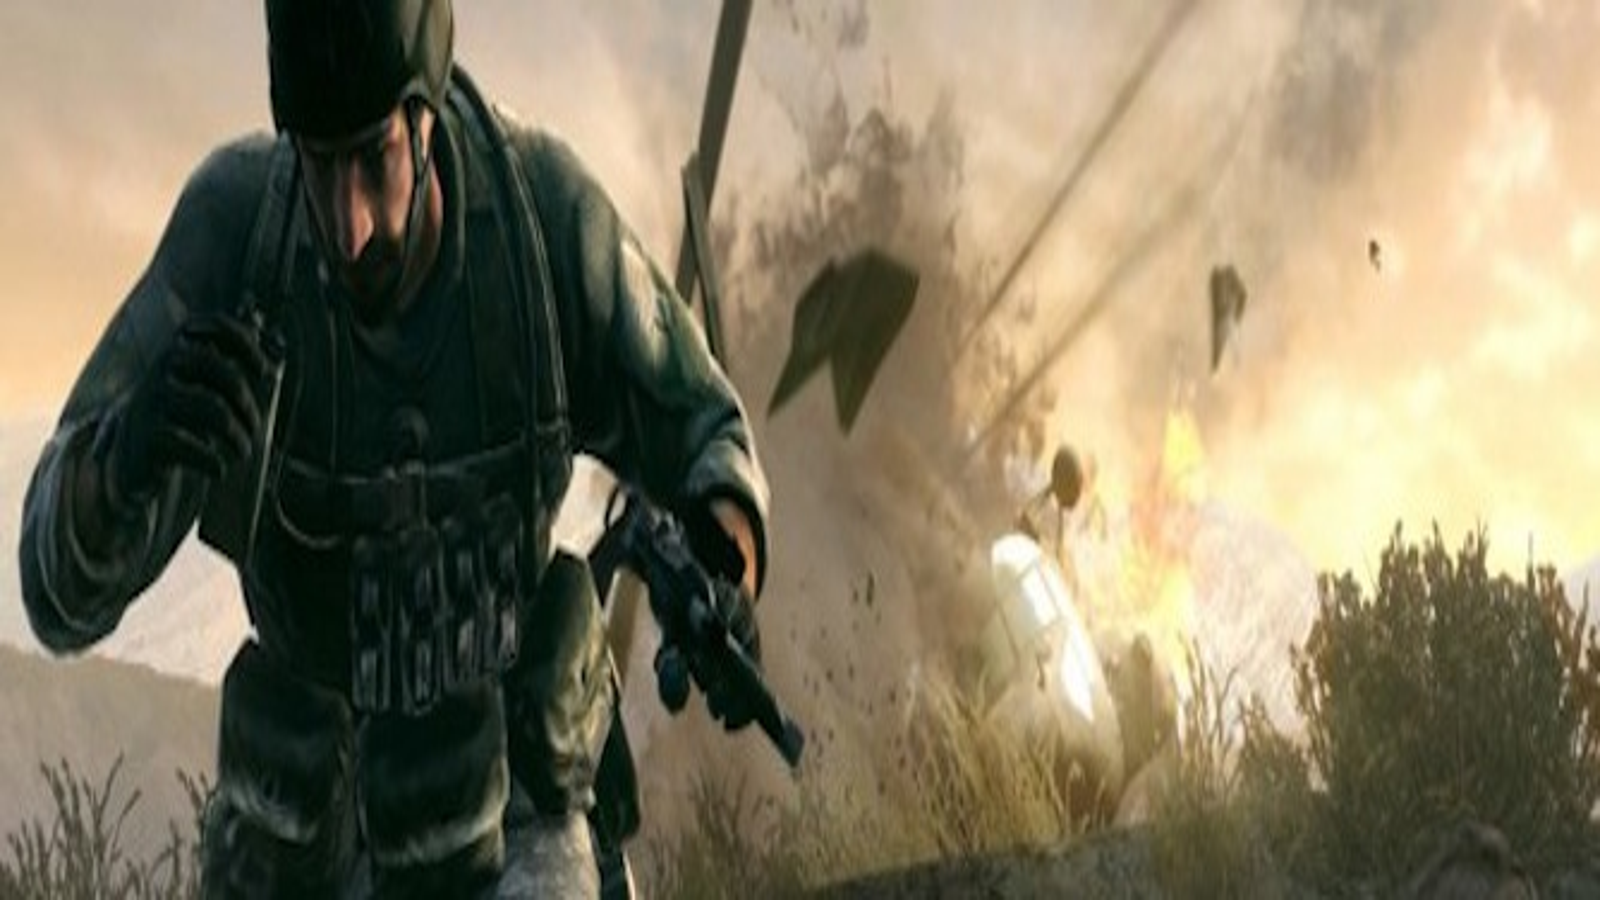 Medal of Honor: Warfighter (Usado) - PS3 - Shock Games